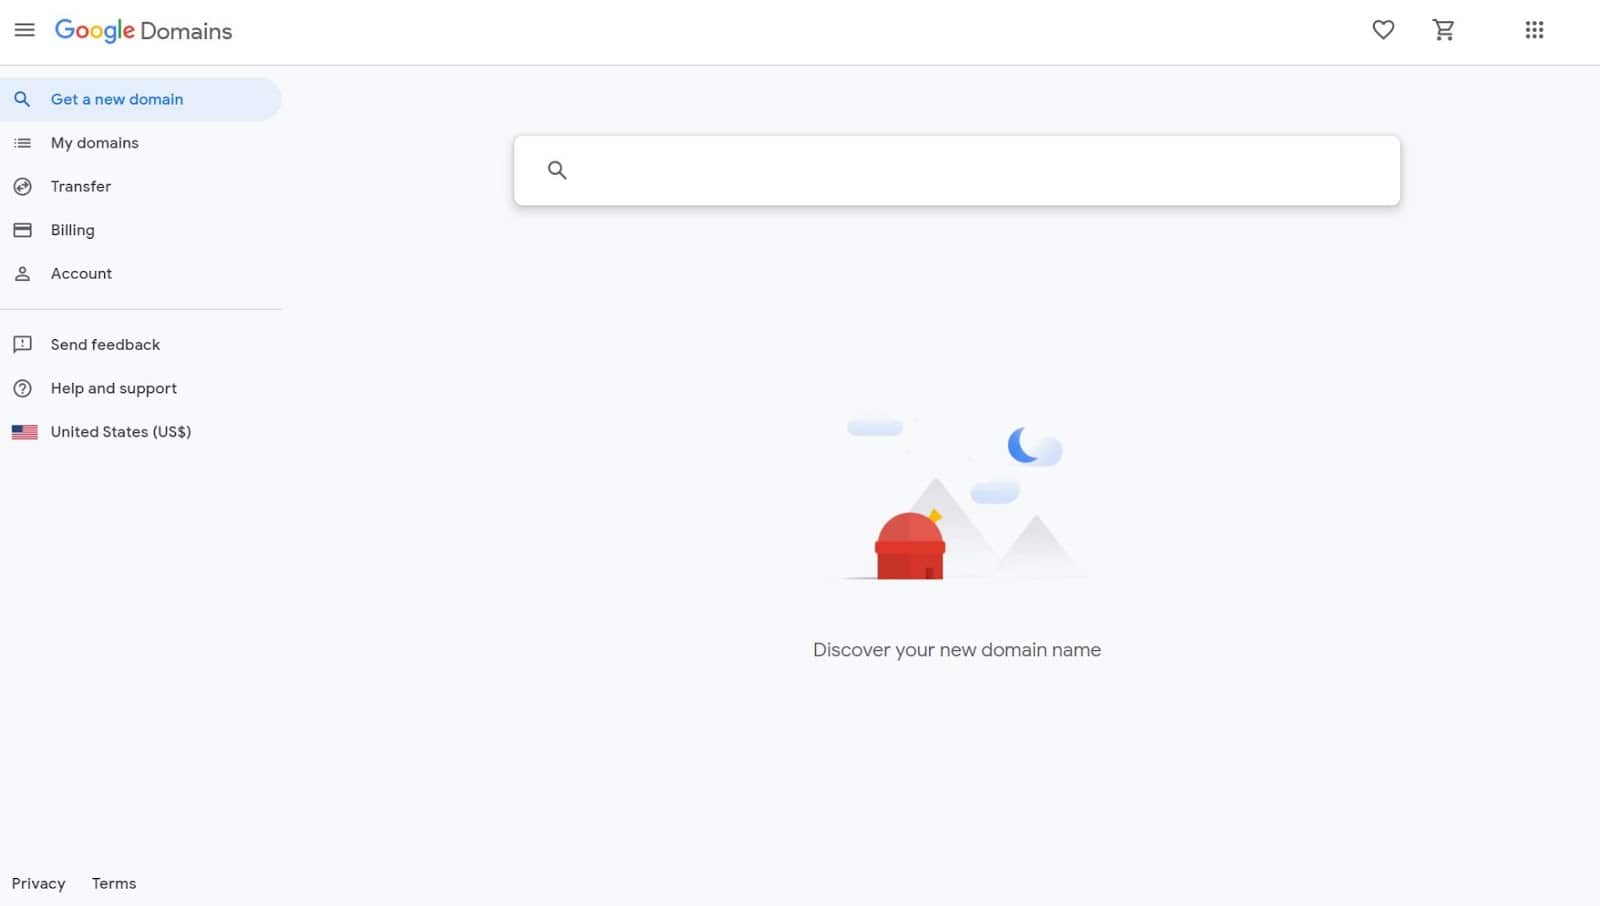 Google Domains homepage